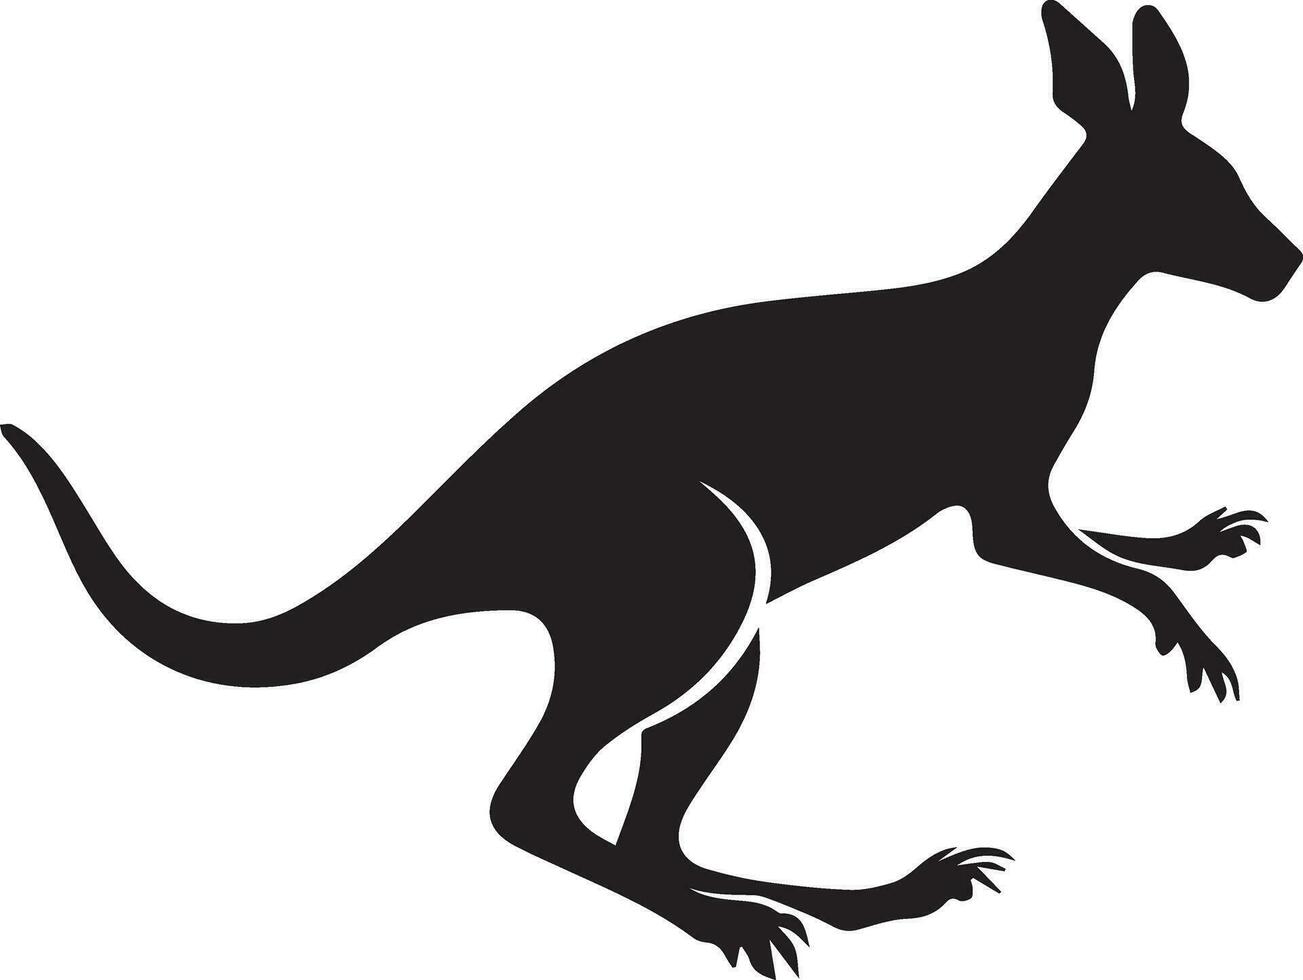 kangaroo animal vector silhouette illustration